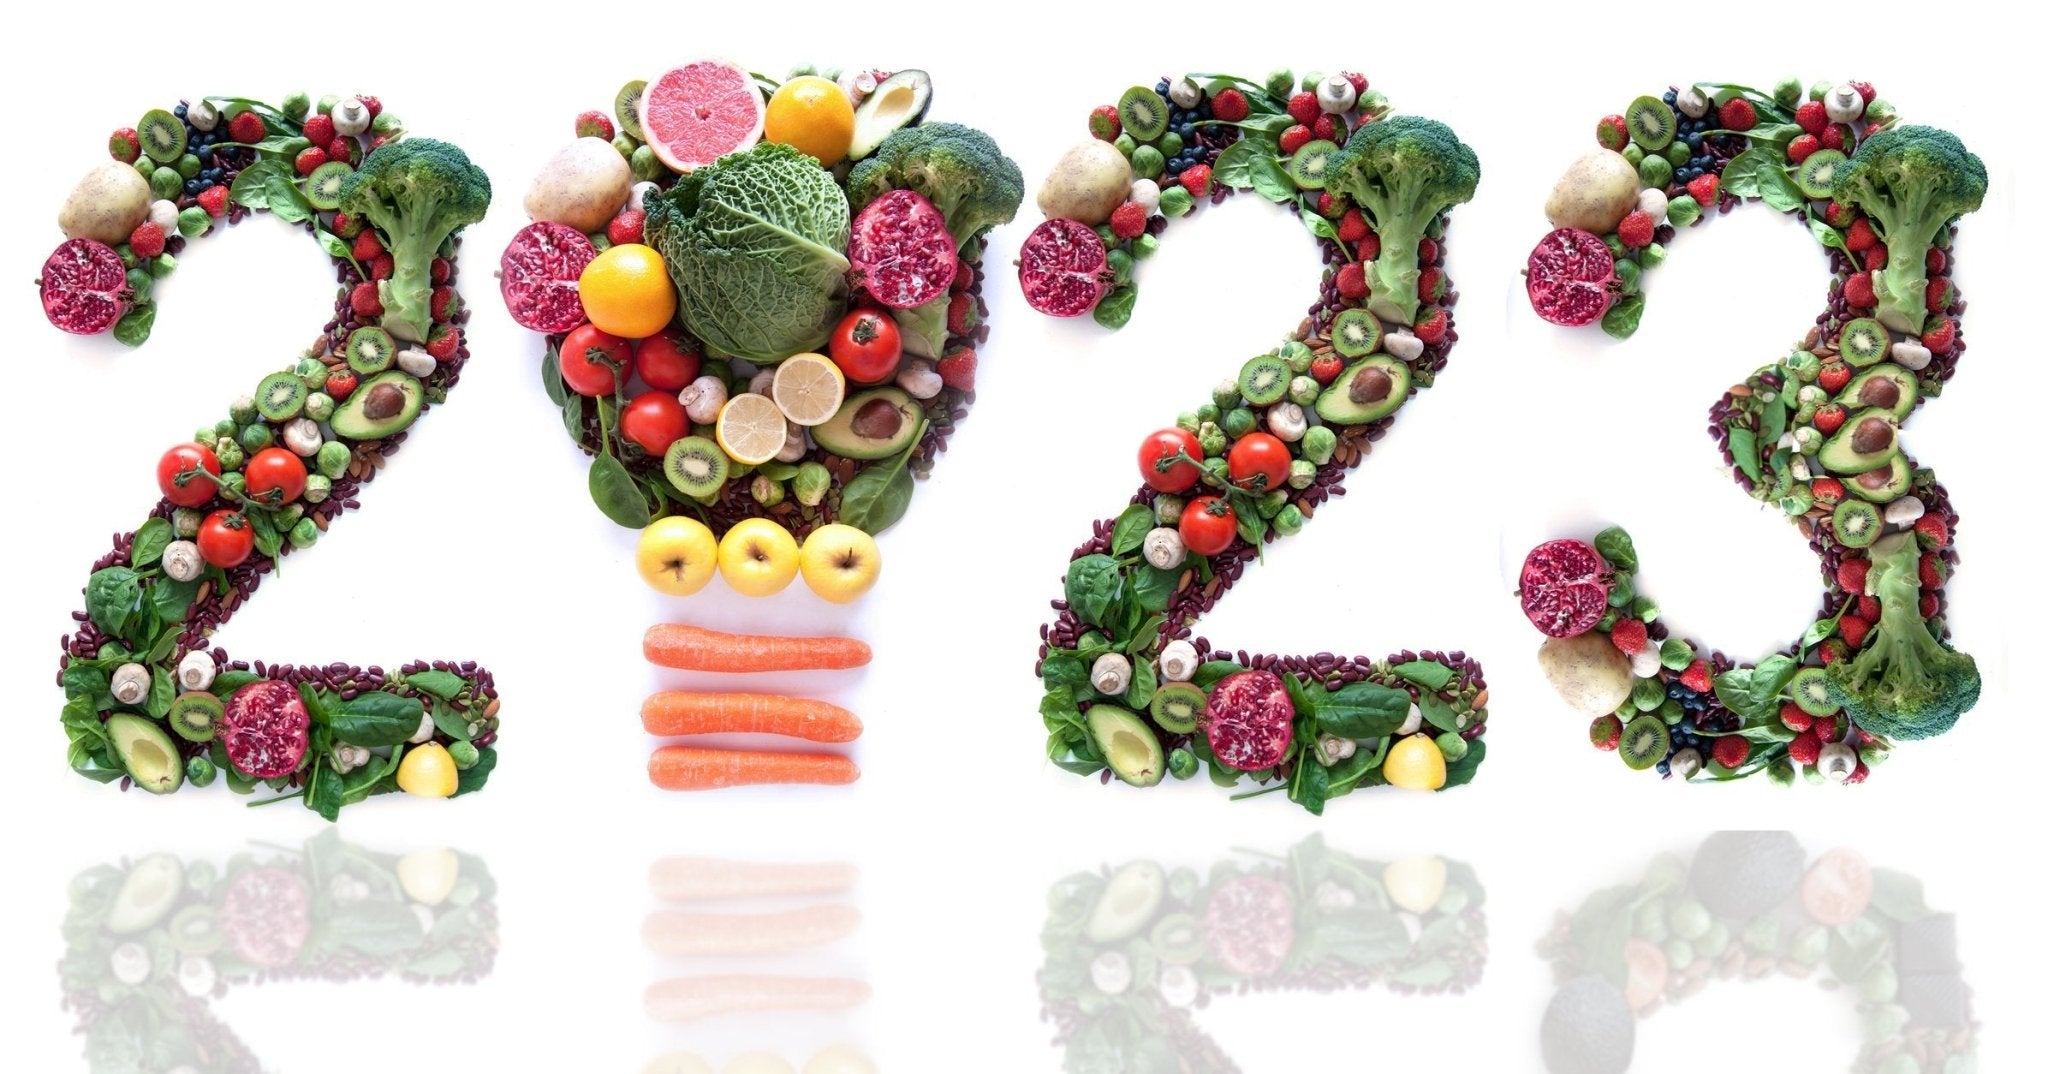 2023 Food Trends: Exploring the Top 10 Trending Foods - Cape Crystal Brands